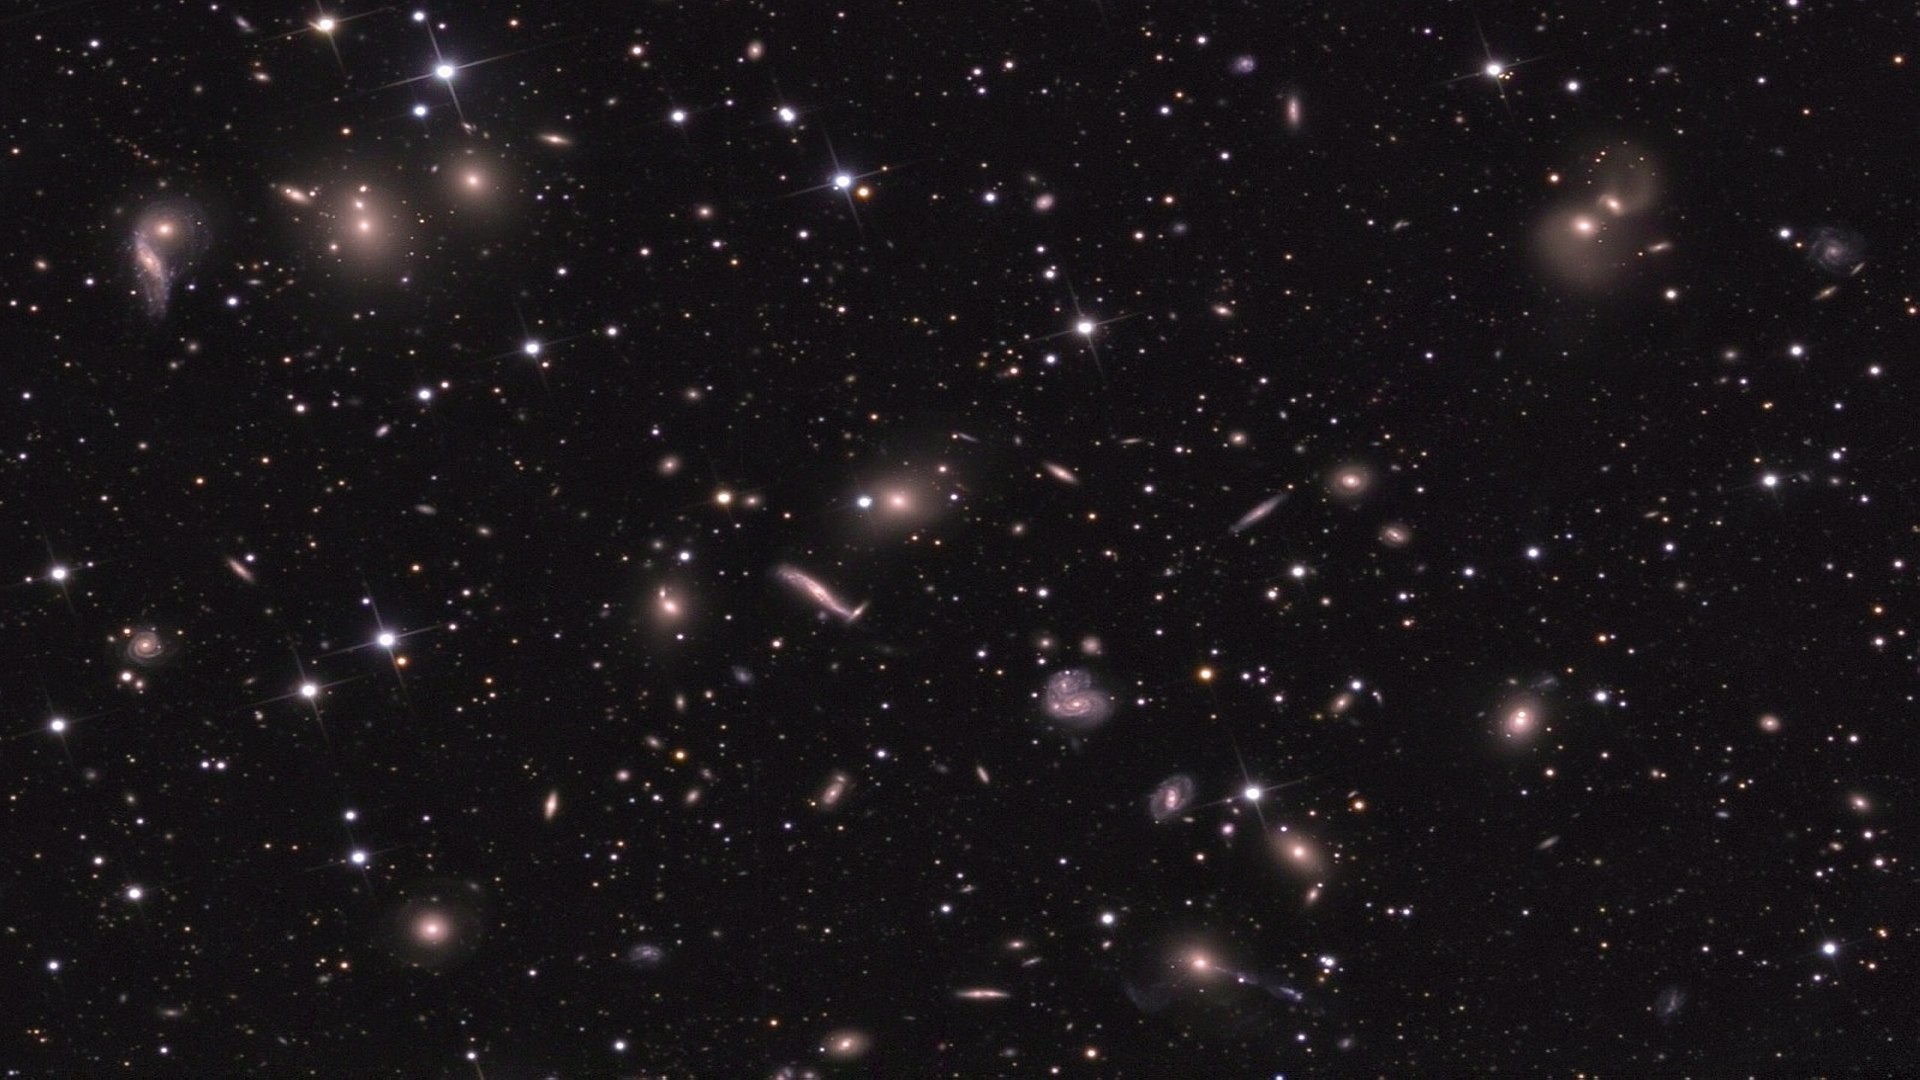 1920x1080 Star-wars-wallpaper-wallpapers -war-pixel-galaxy-galaxies-space-hercules-large-cluster.jpg